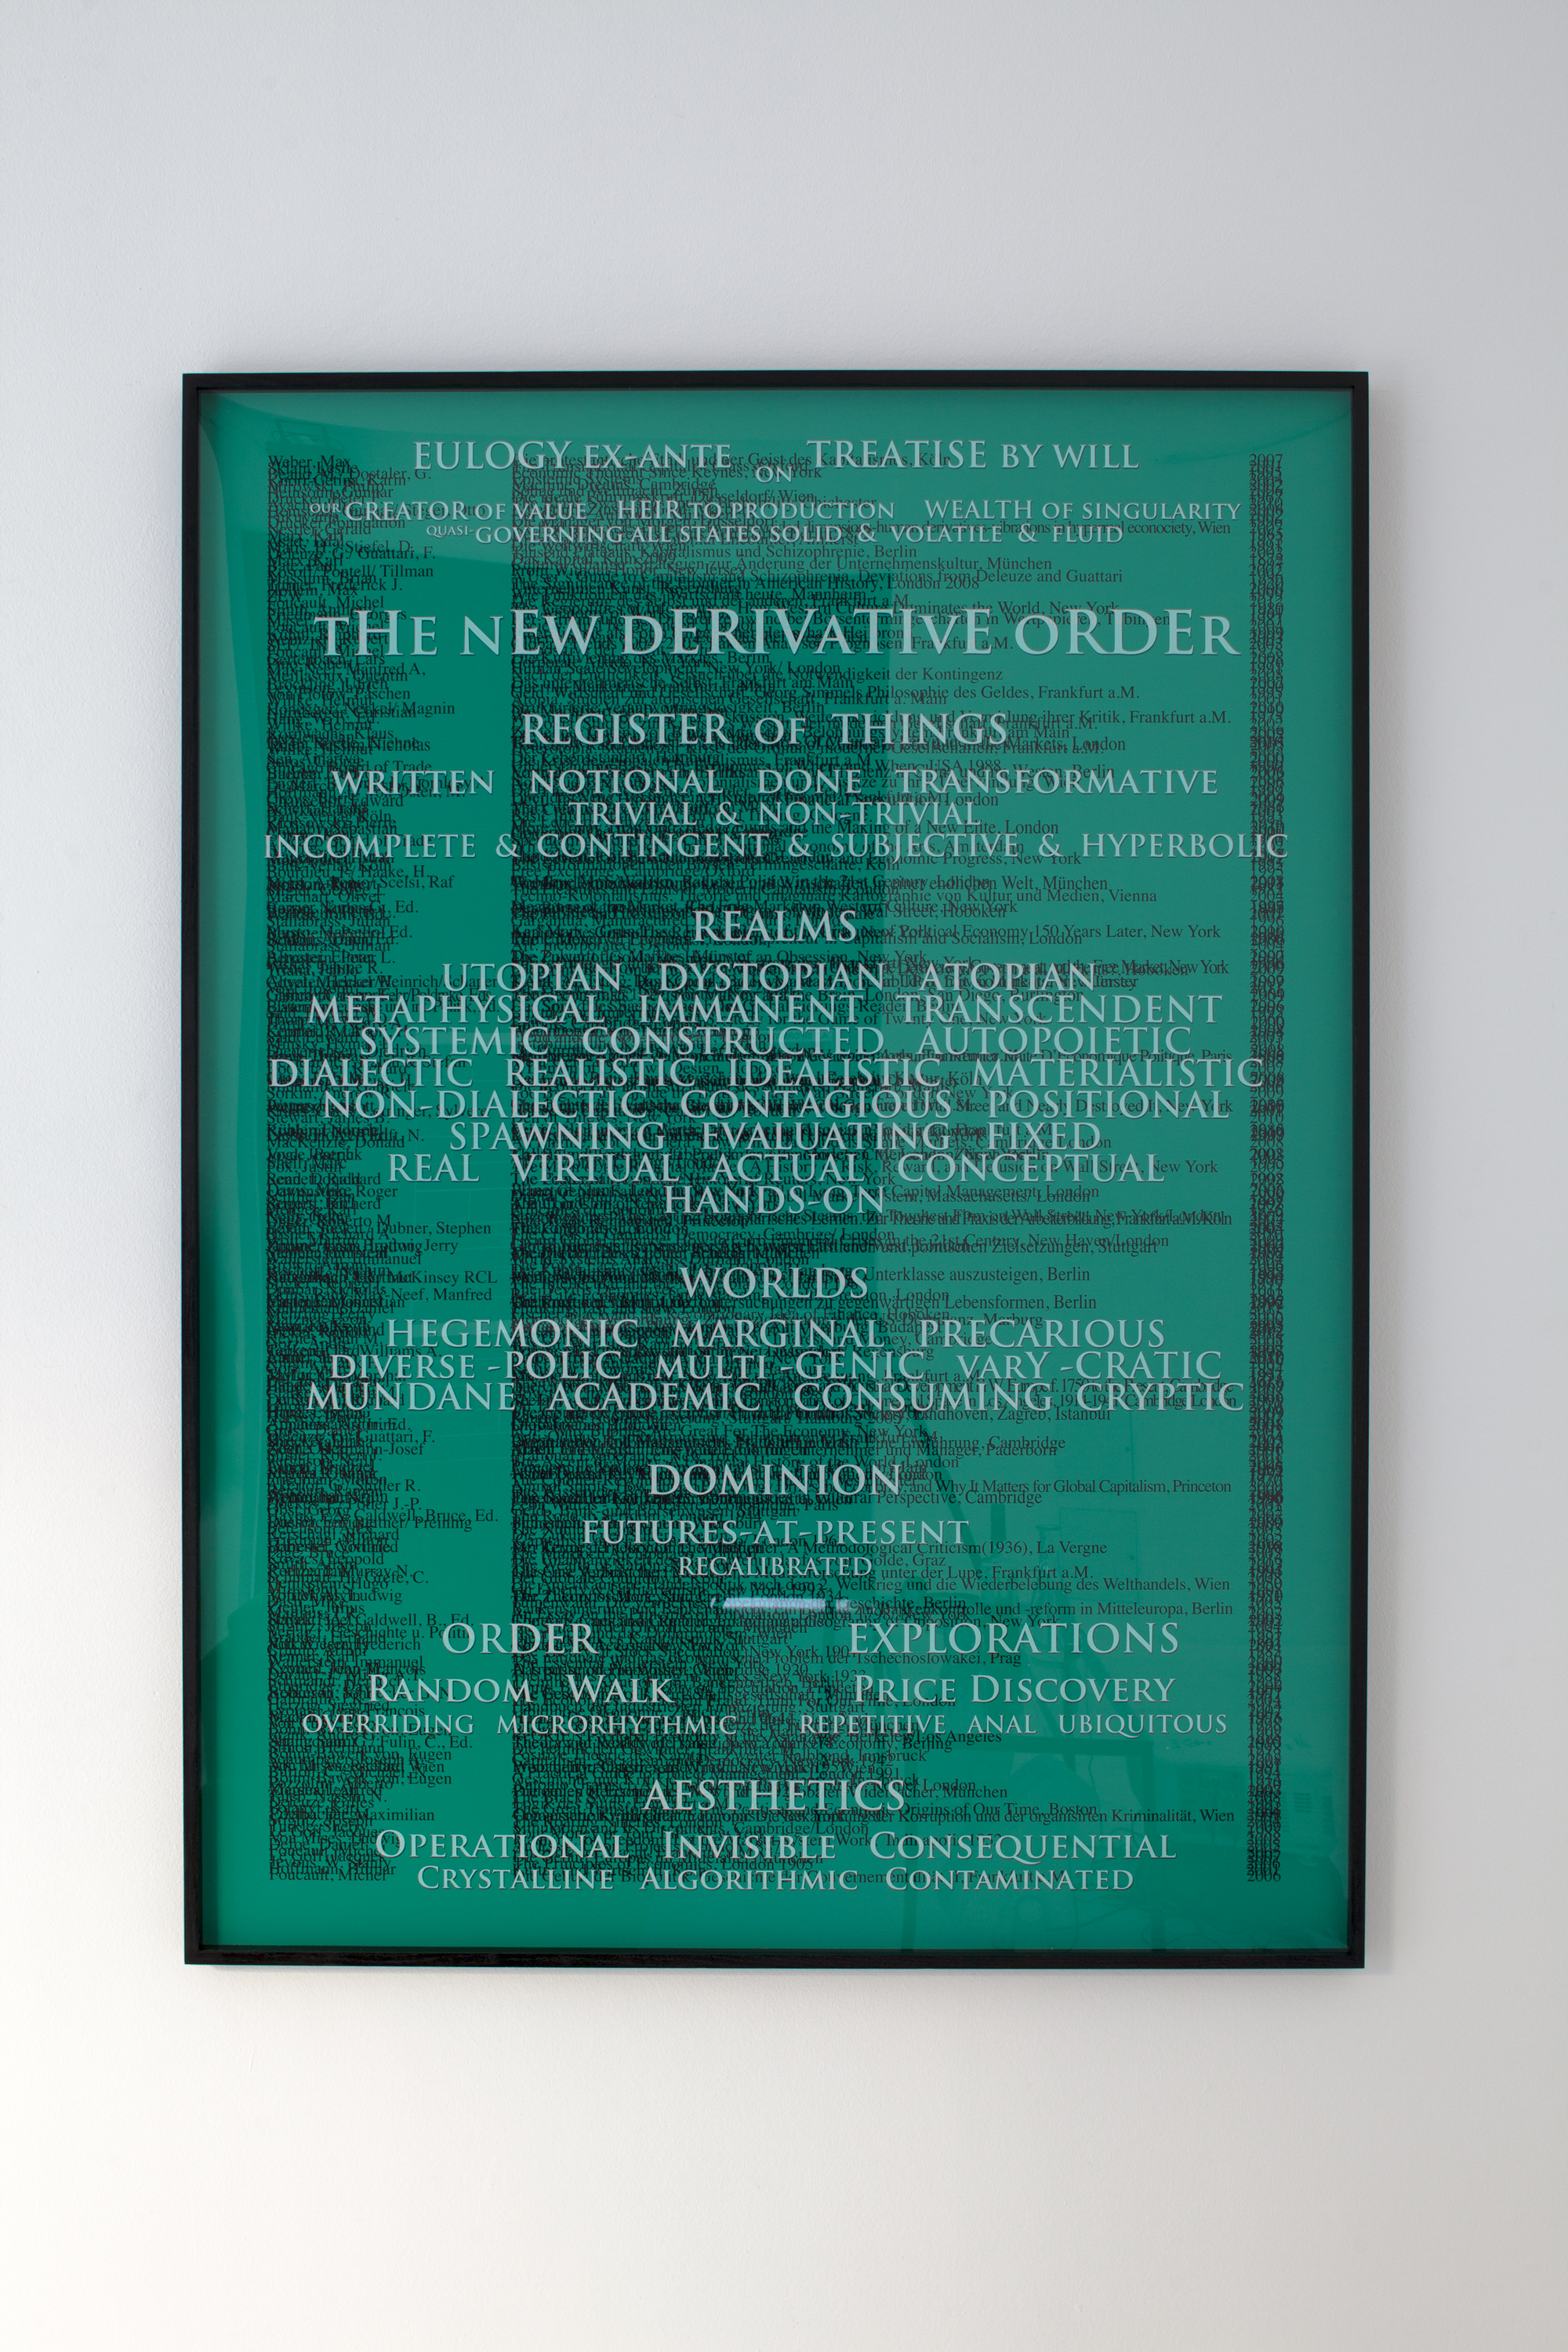 Gerald Nestler, <i>THE NEW DERIVATIVE ORDER</i>. Register, framed pigment print, 125 x 269 cm, 2014. Photograph by Wolfgang Thaler